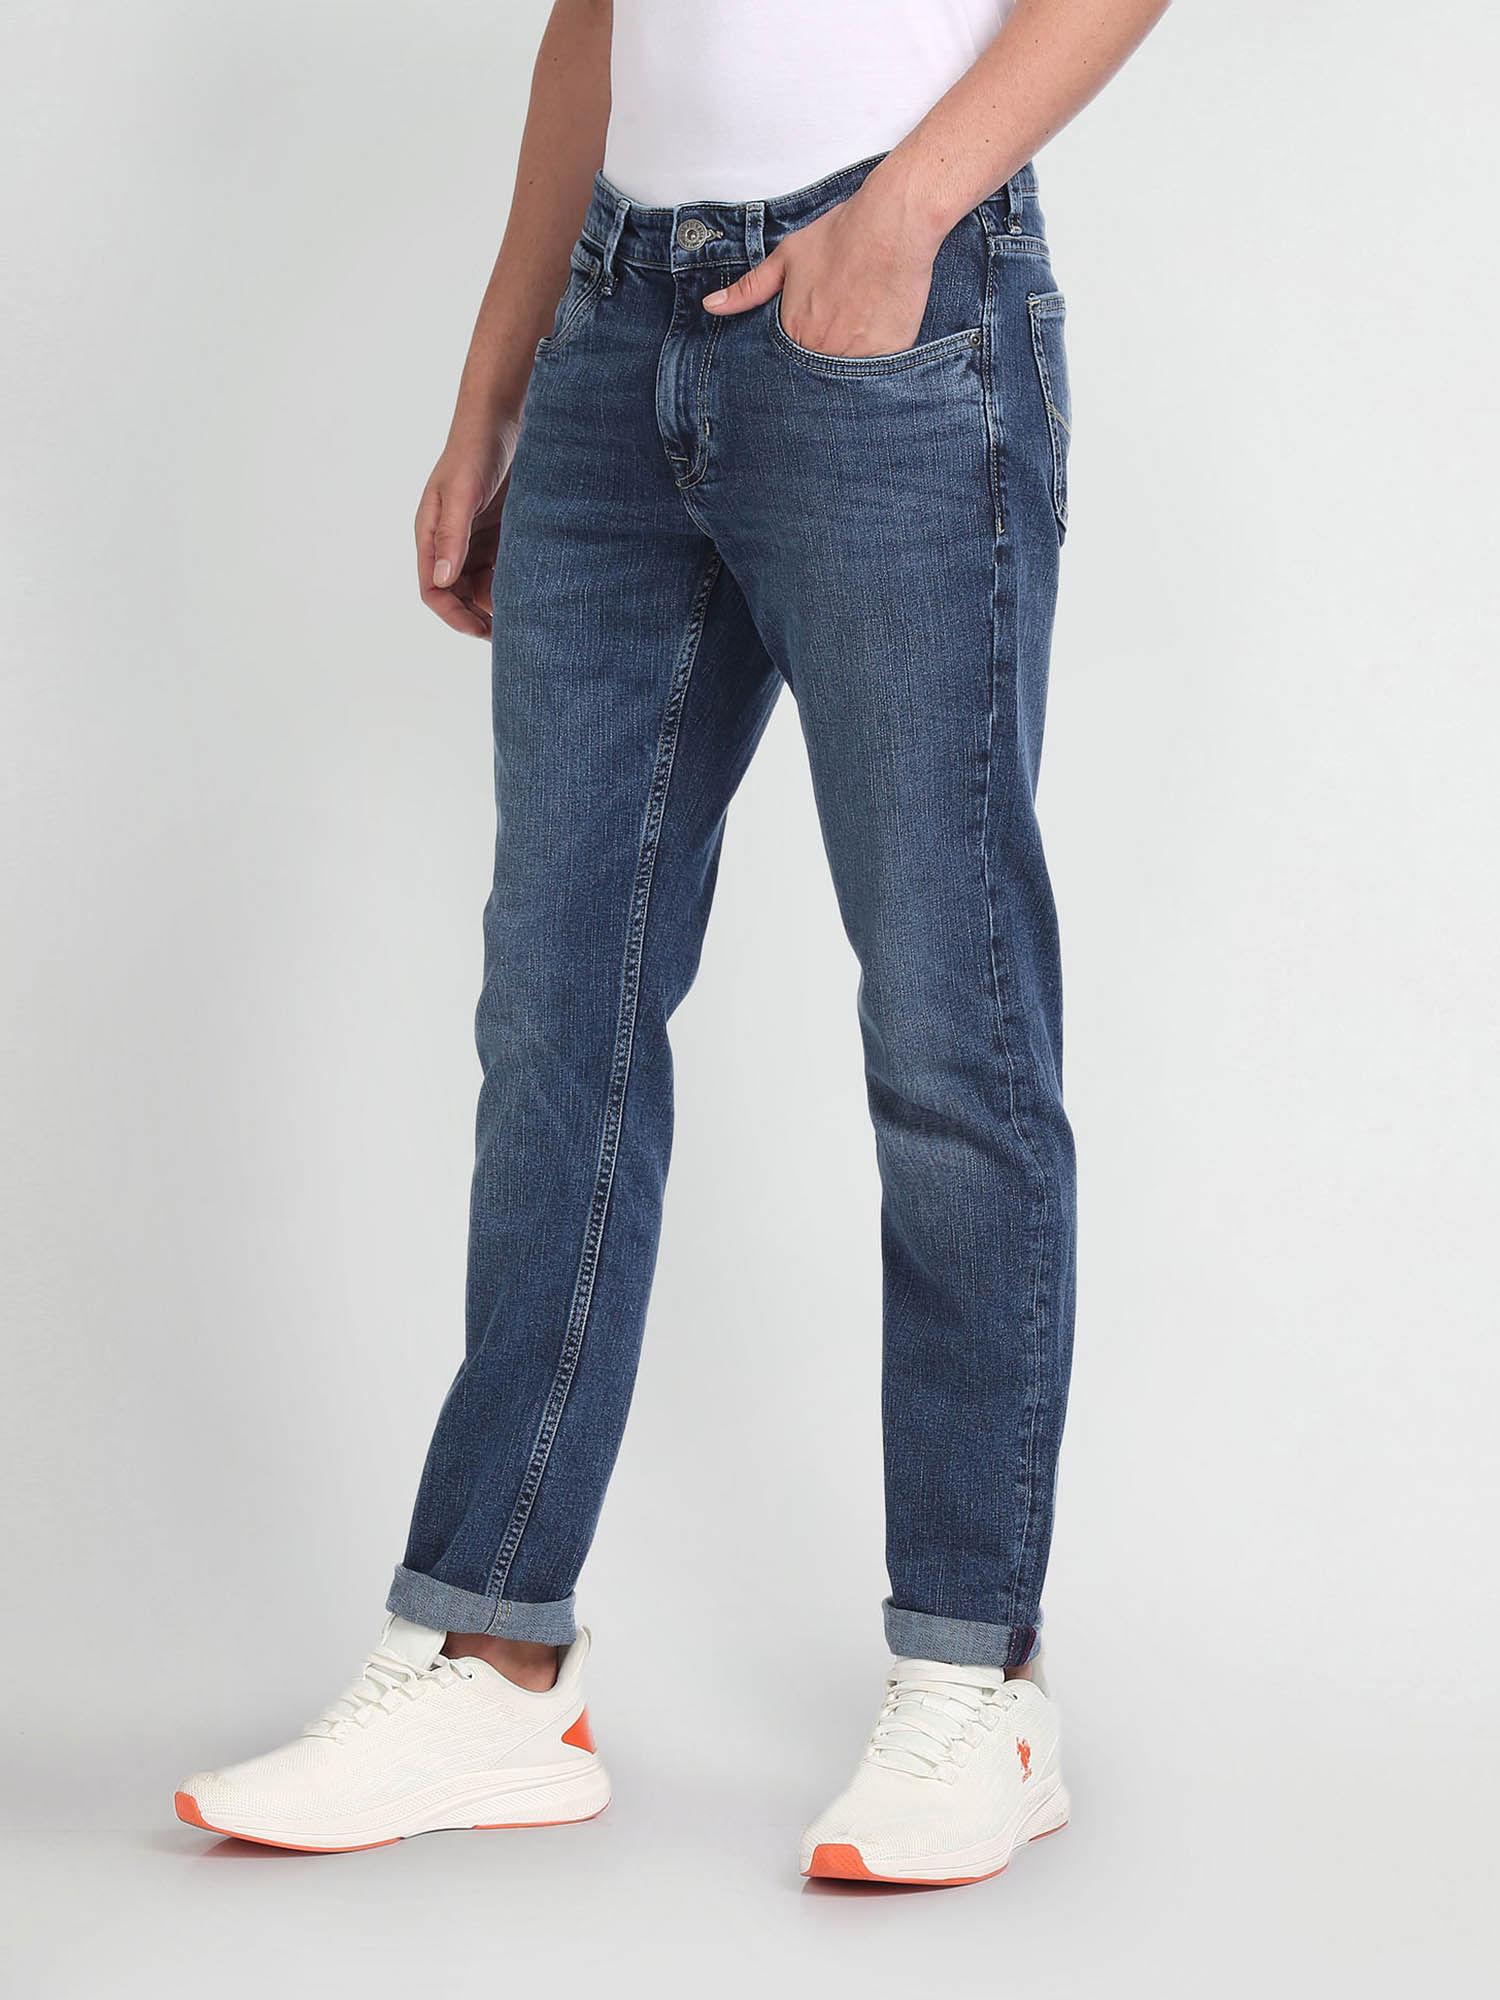 brandon slim tapered fit blue jeans